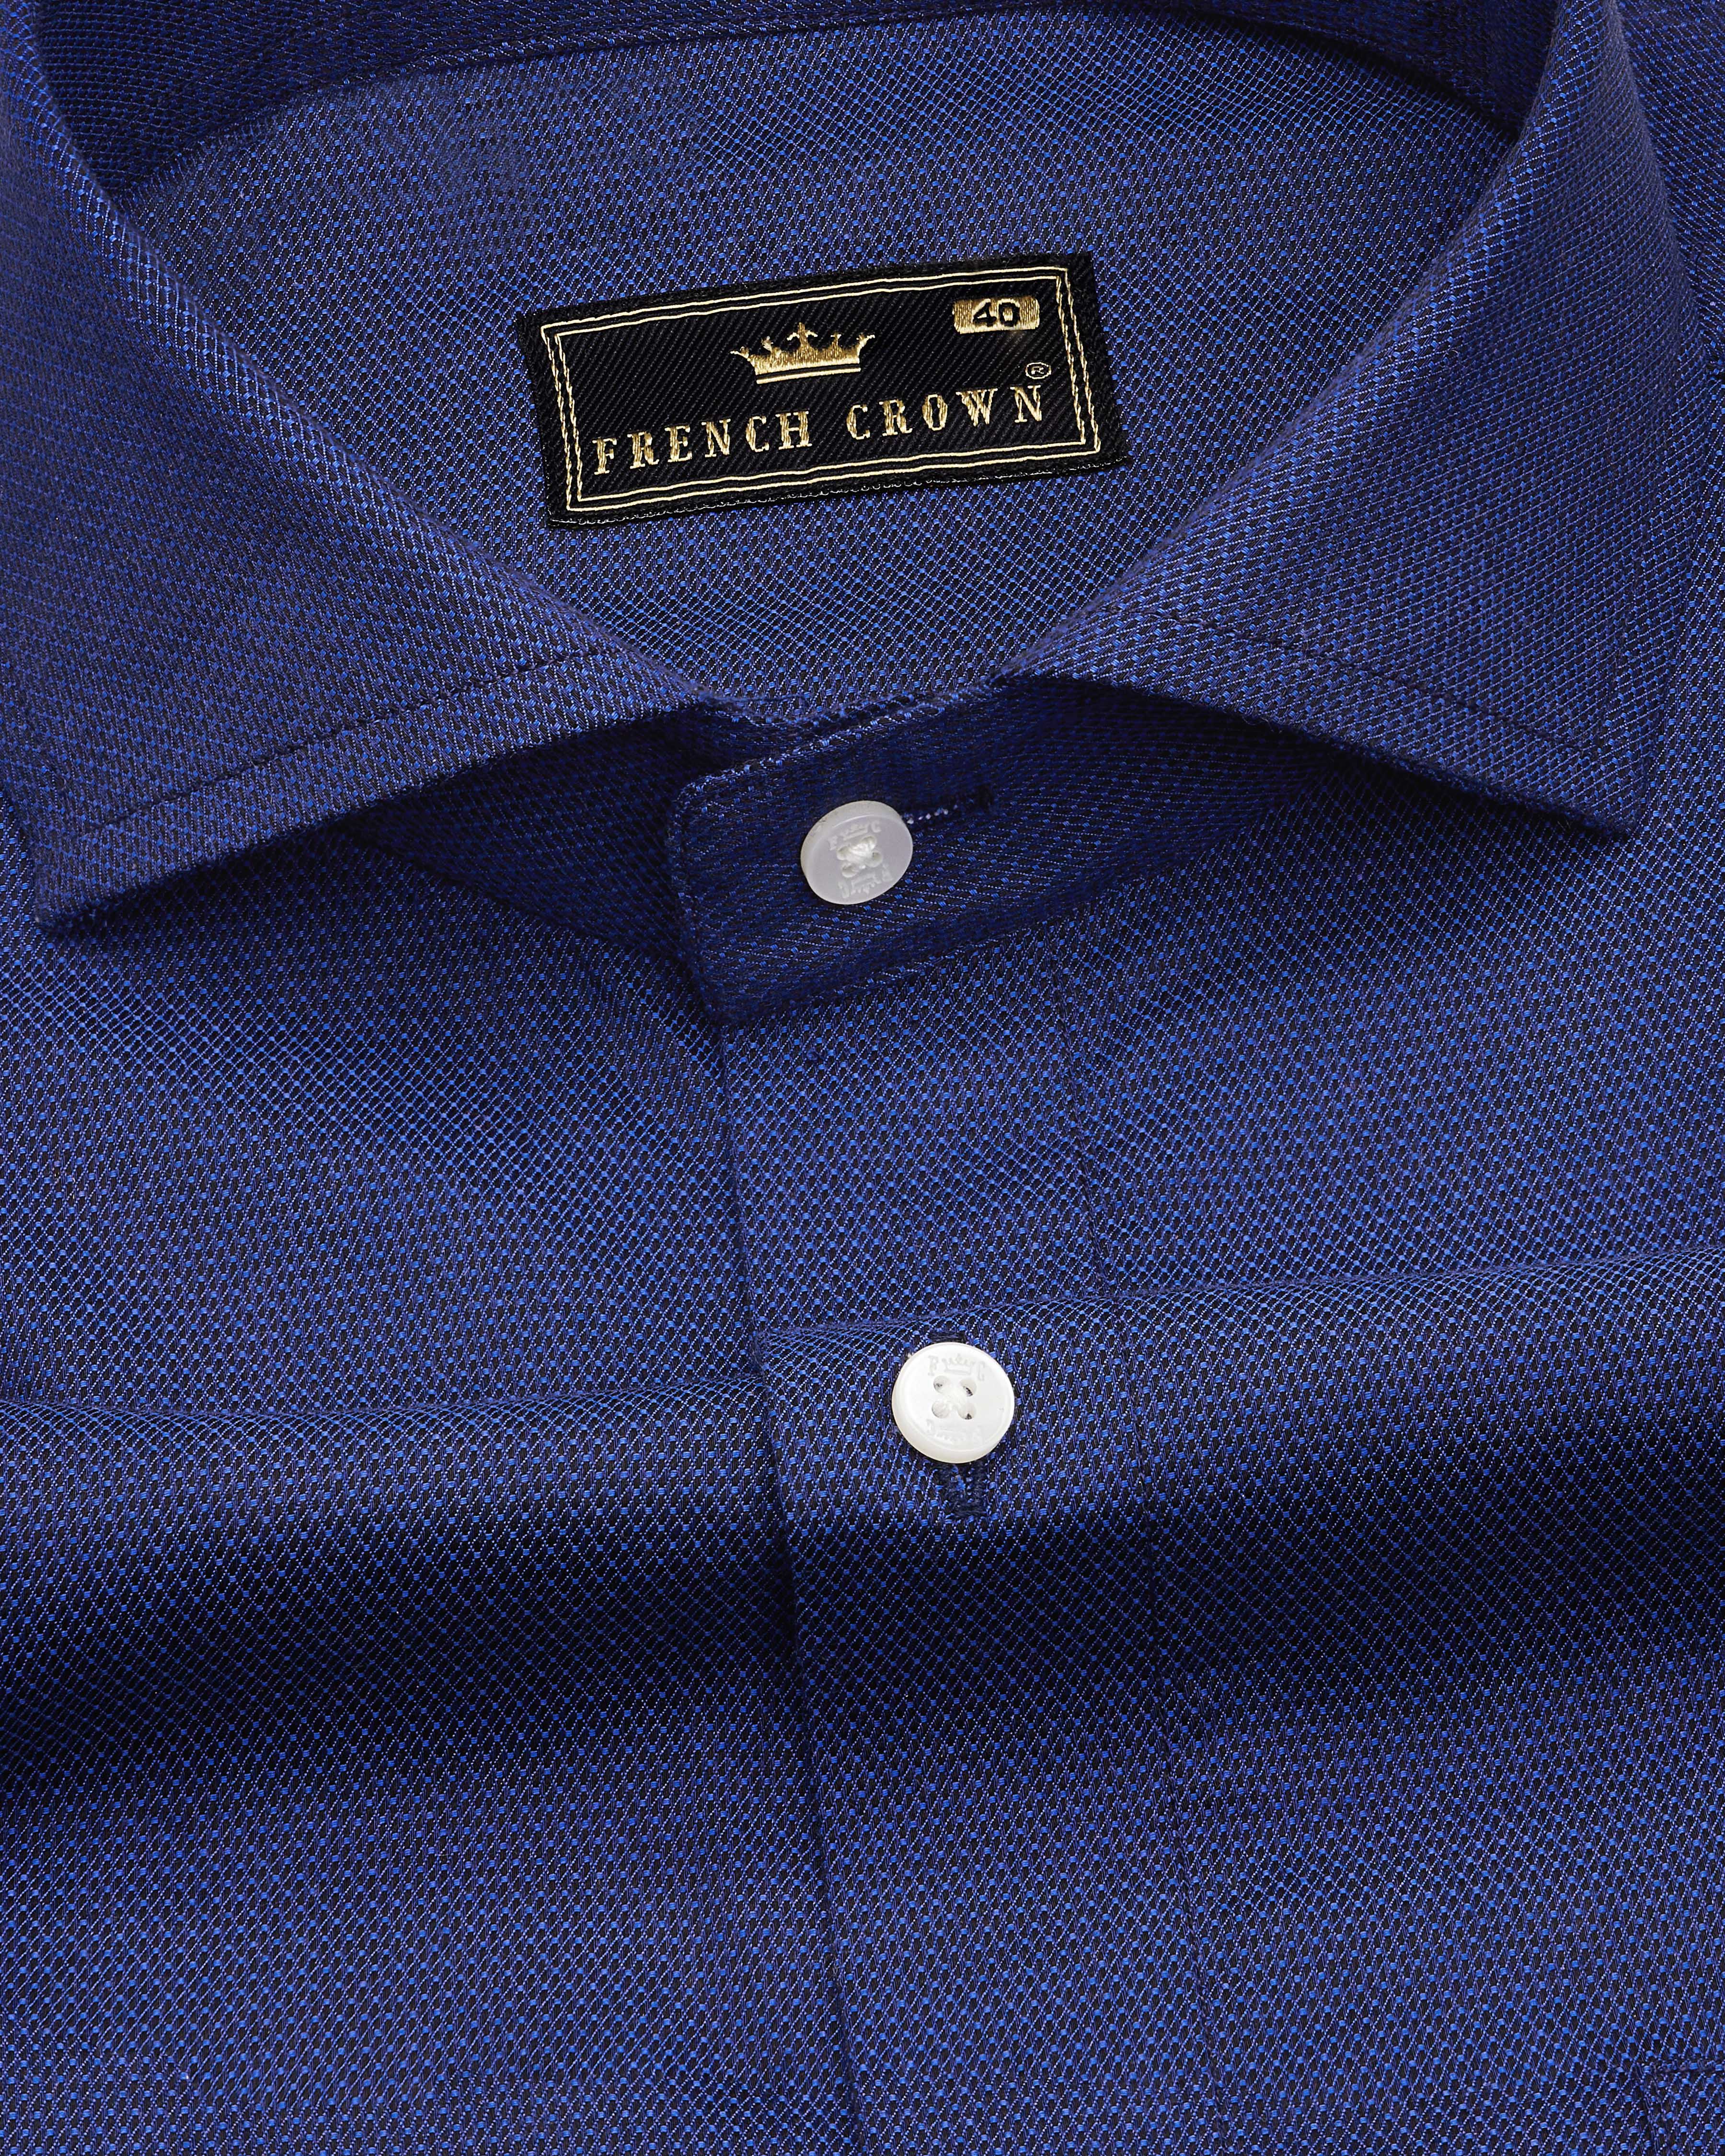 Rhino Navy Blue Dobby Textured Premium Giza Cotton Shirt